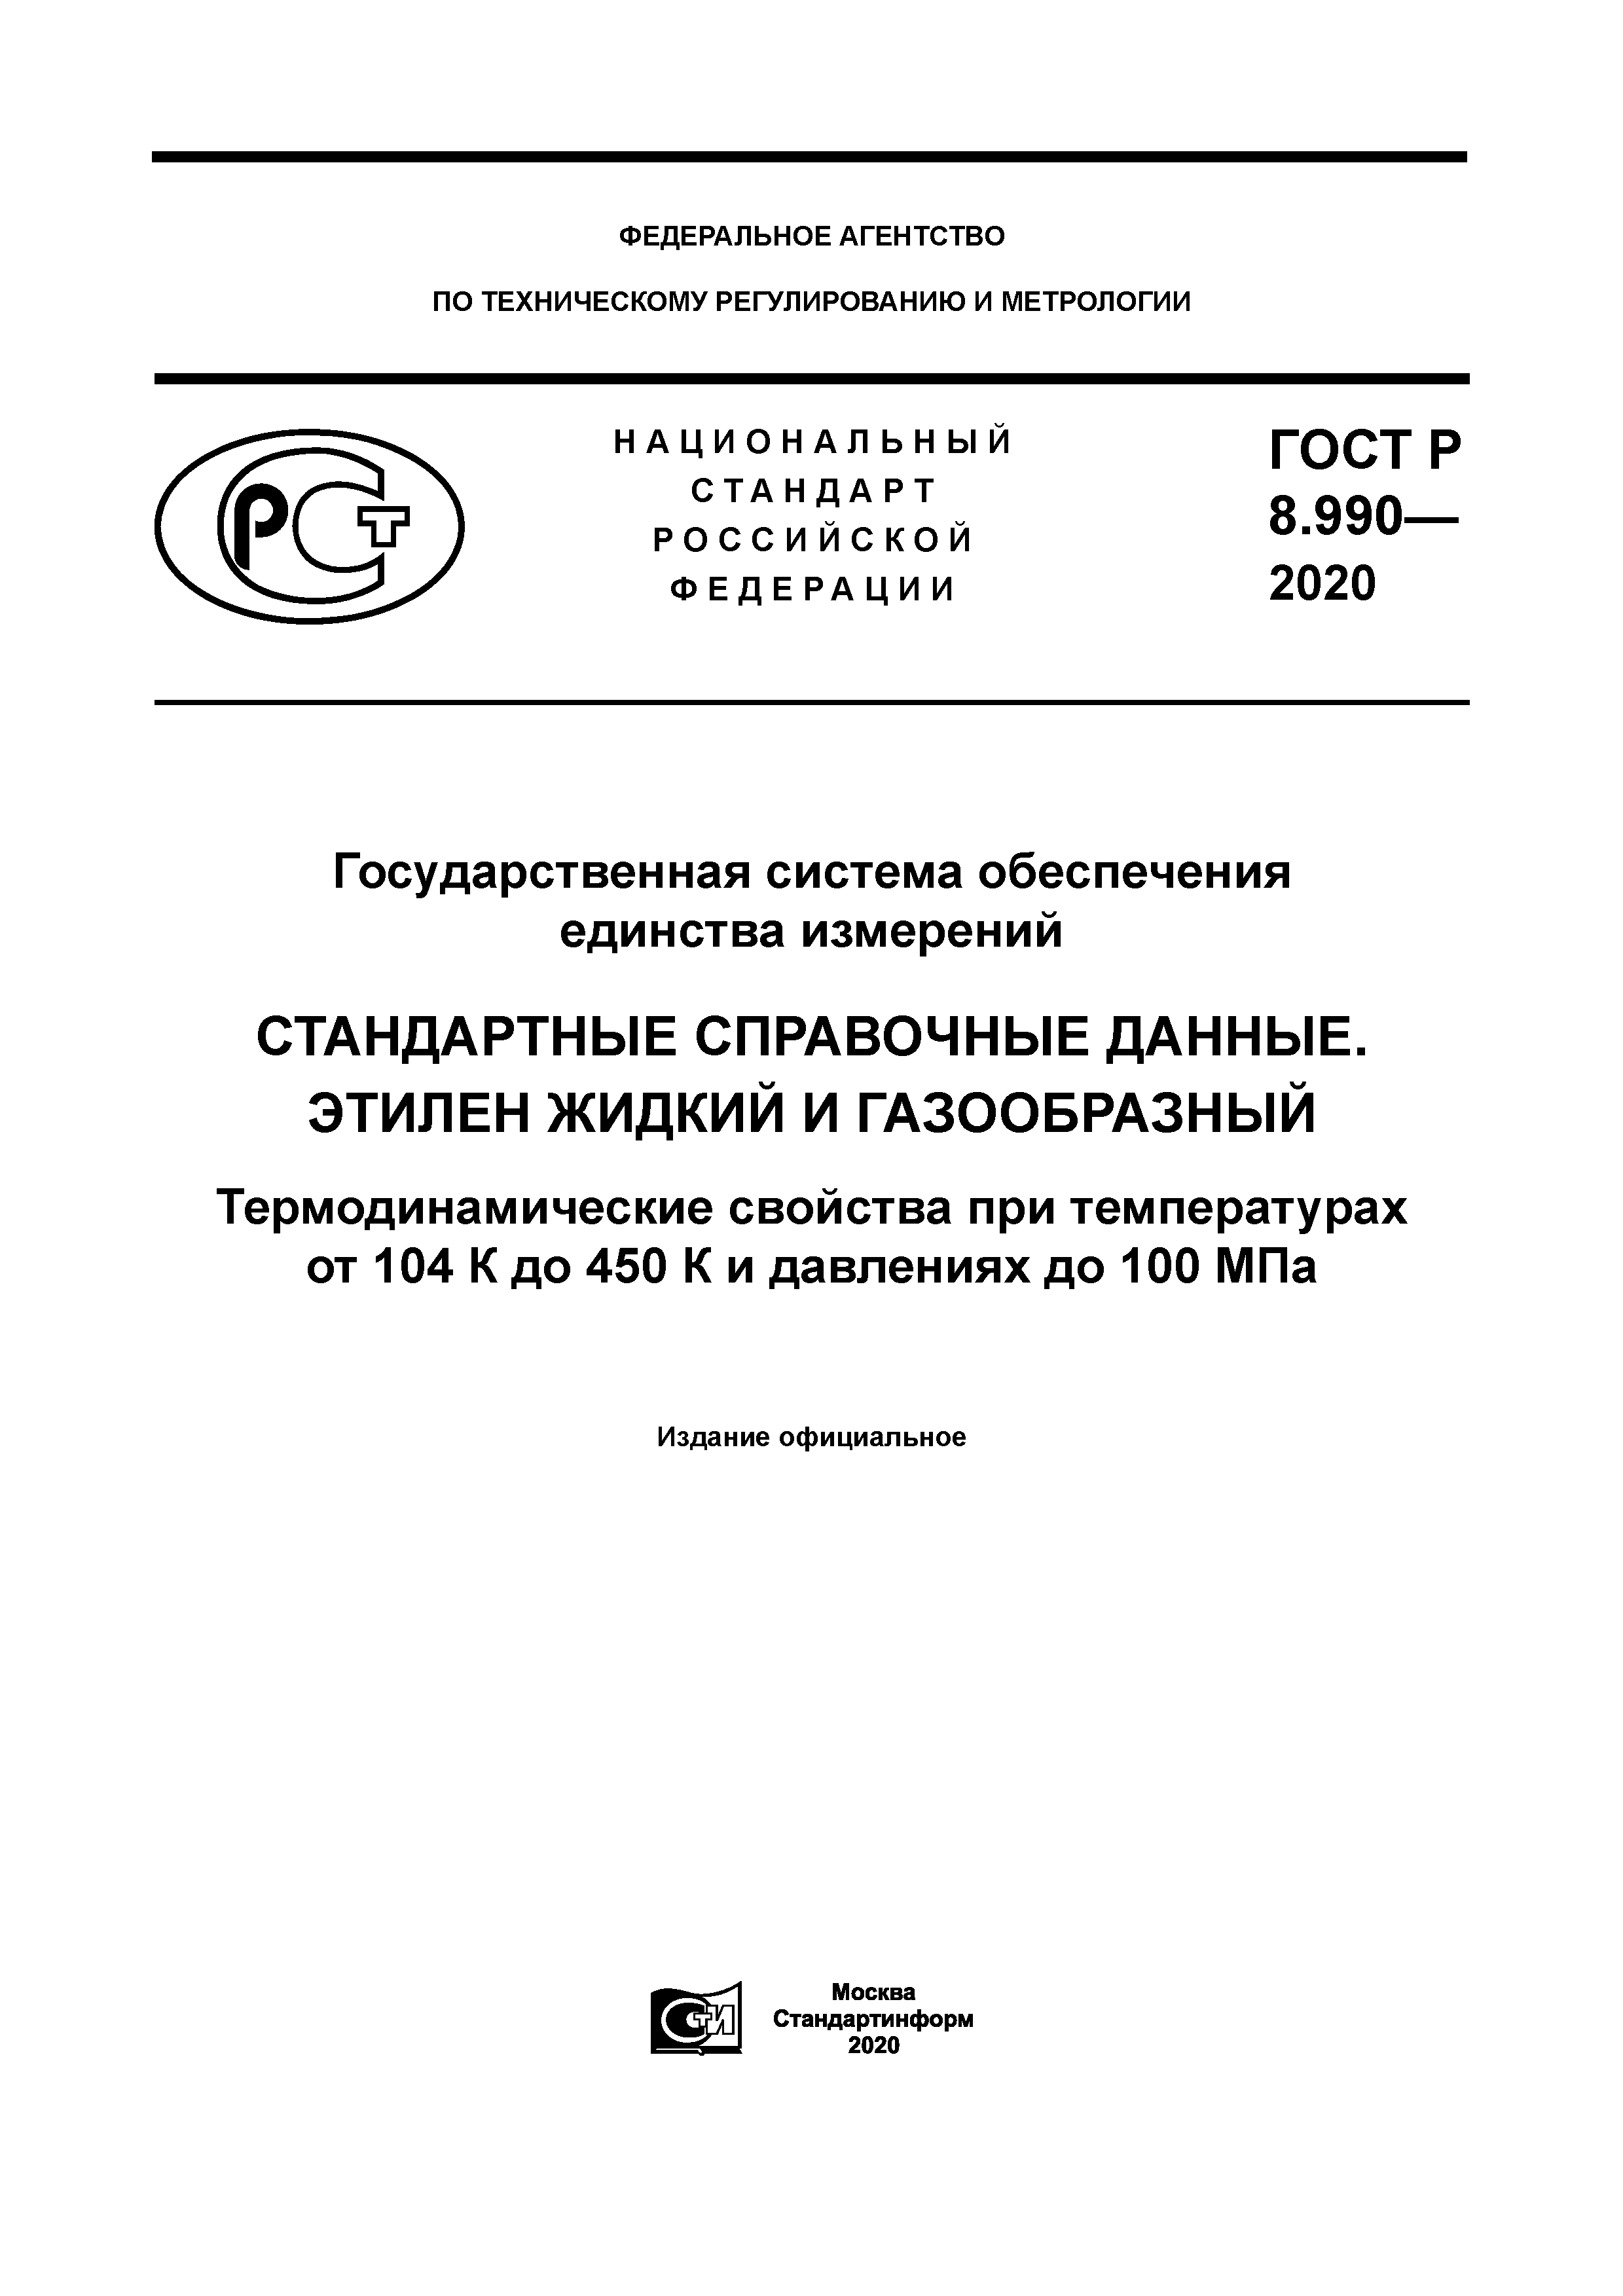 ГОСТ Р 8.990-2020